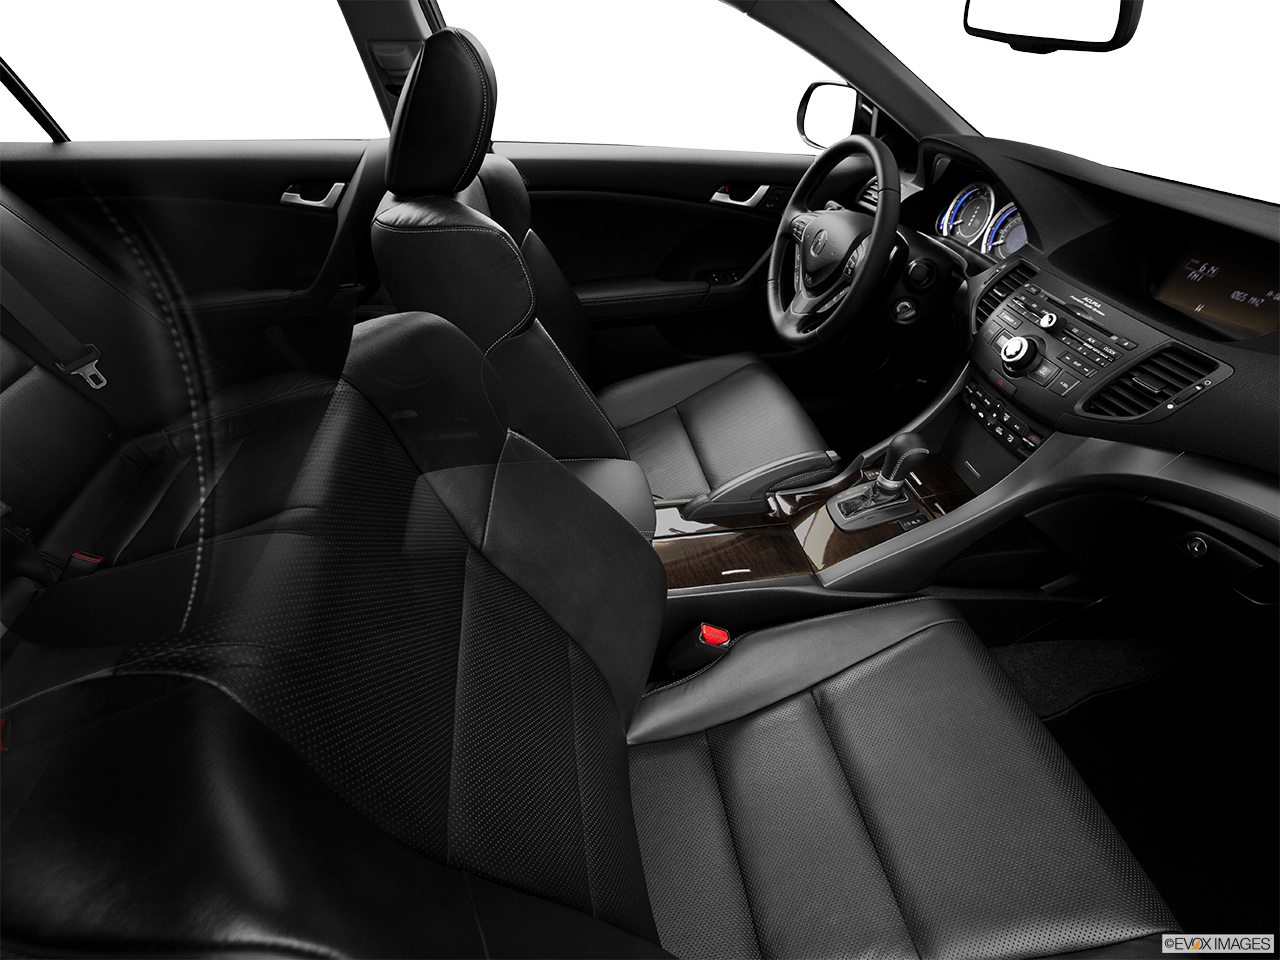 2014 Acura TSX 5-speed Automatic Fake Buck Shot - Interior from Passenger B pillar. 